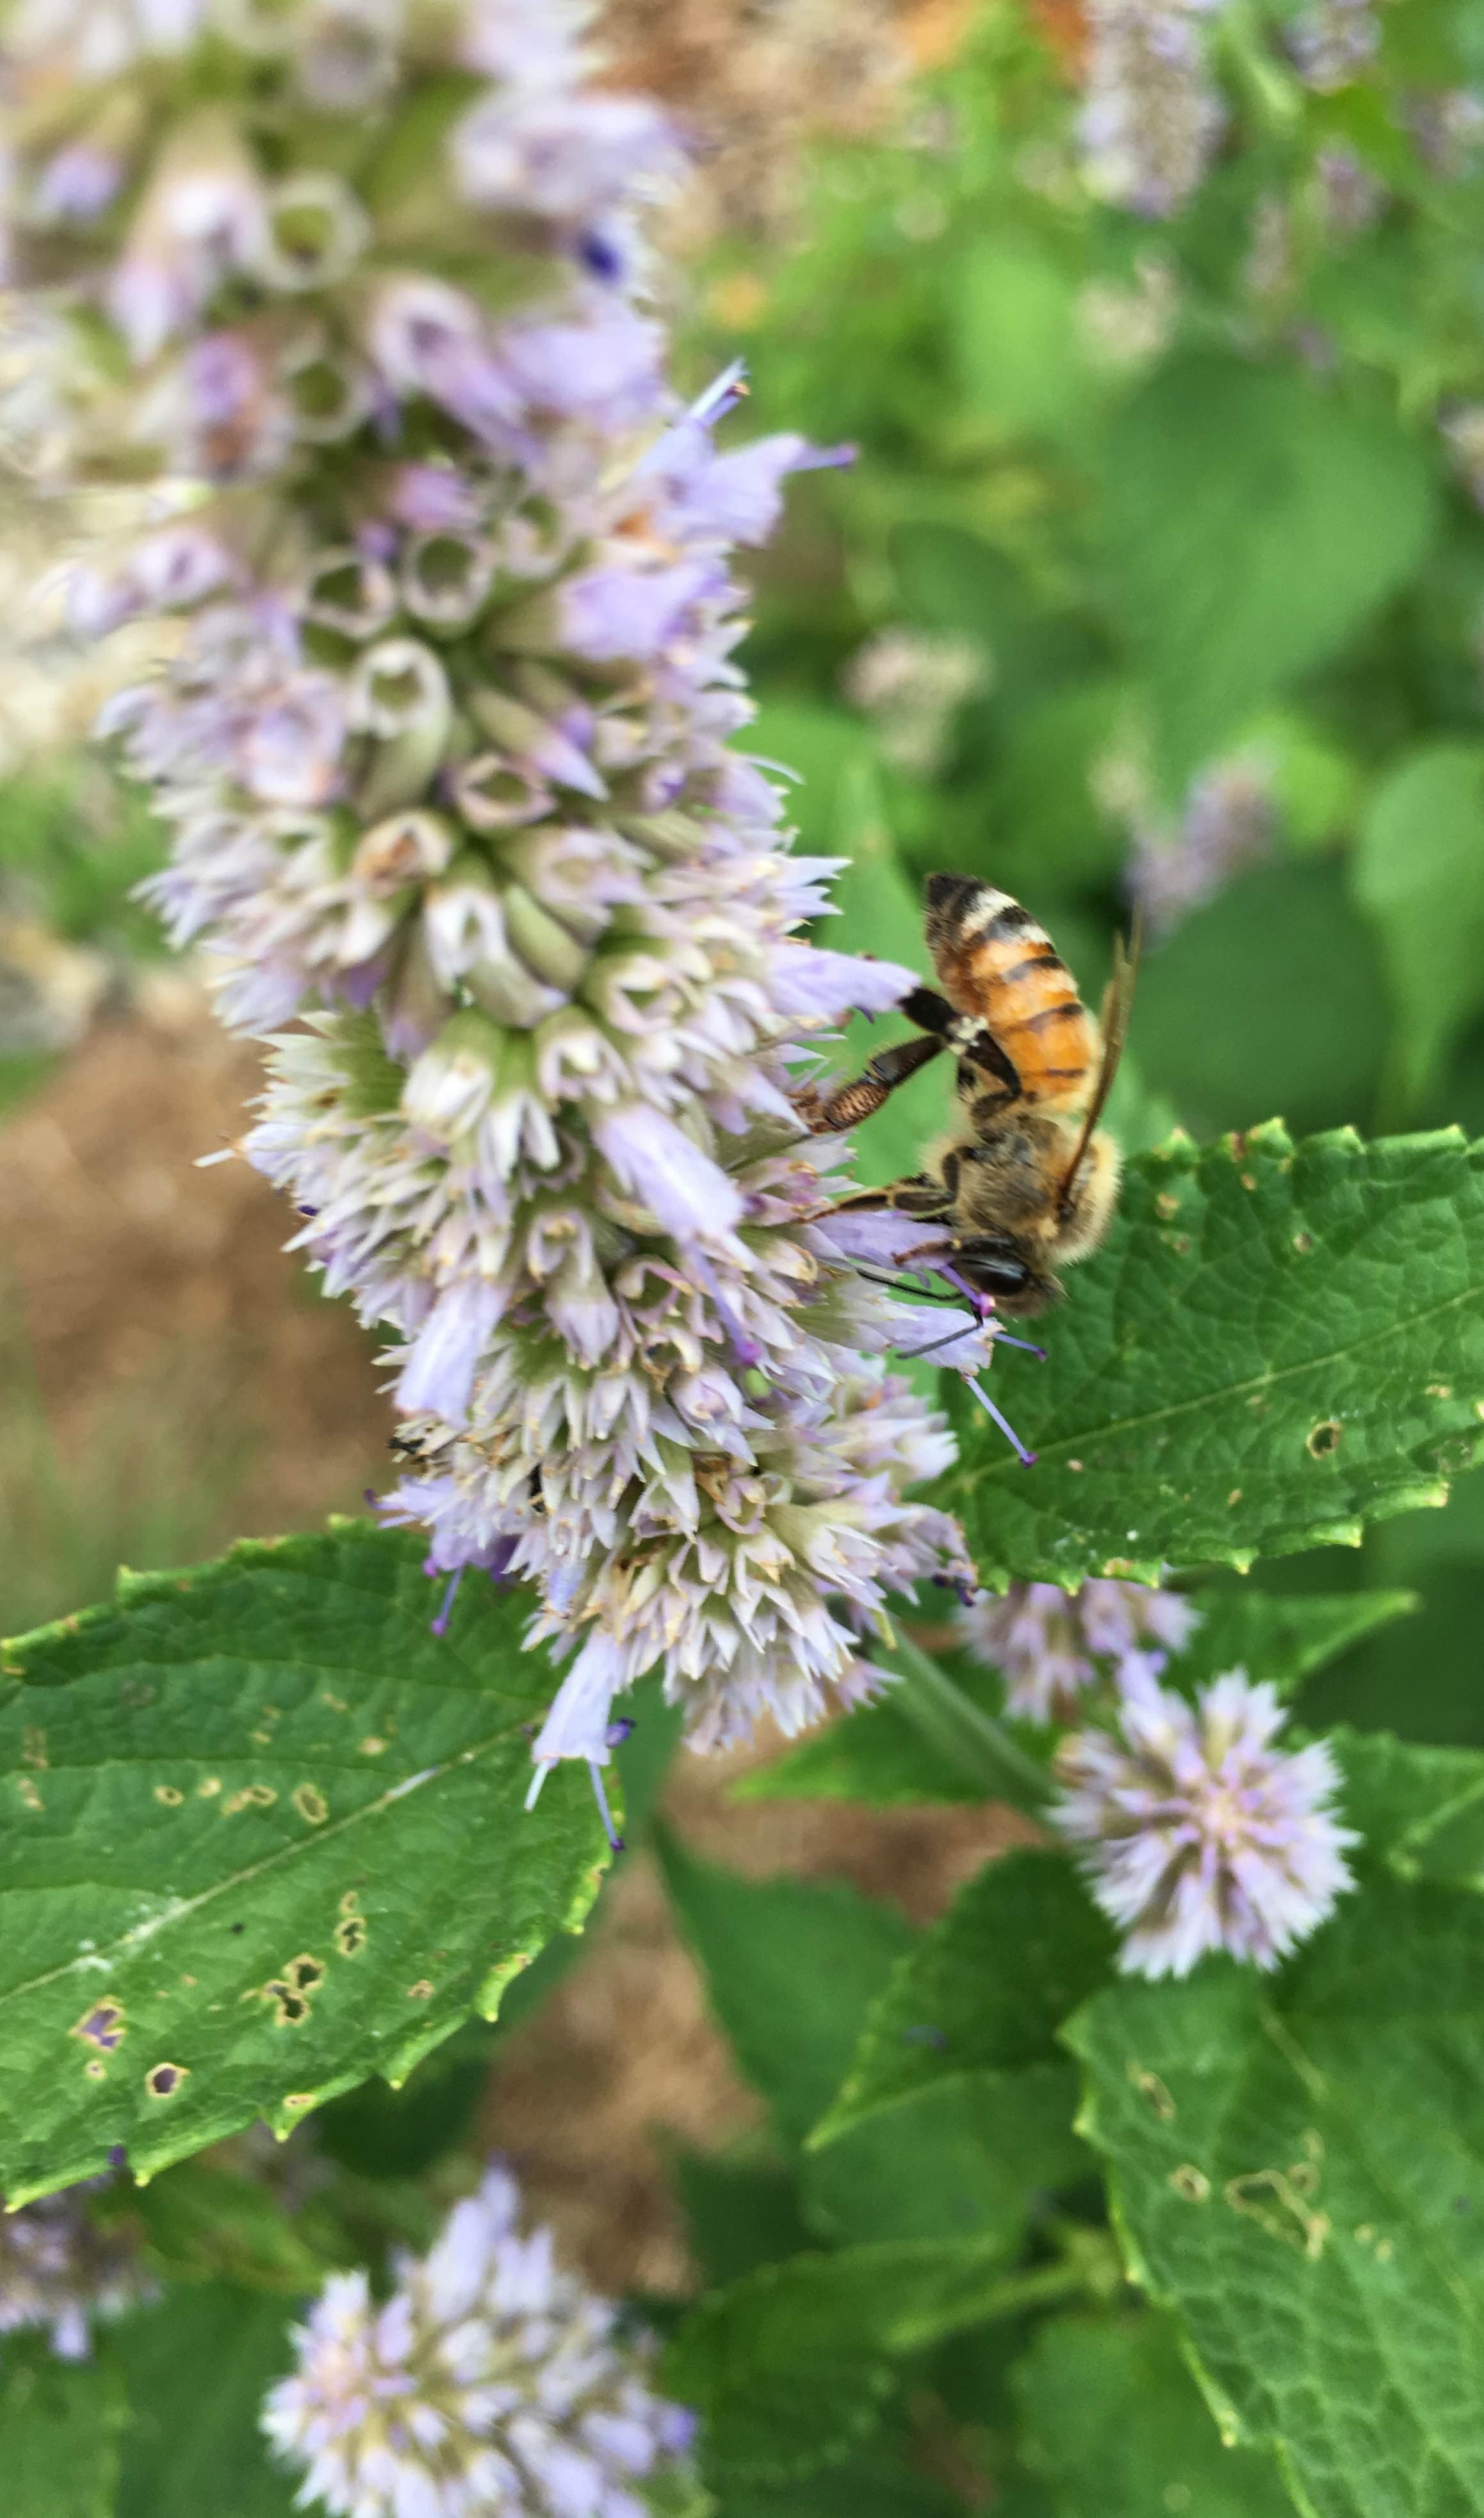  A European Honey bee in the garden in 2021. Photo courtesy of Jessica Brinkworth. 